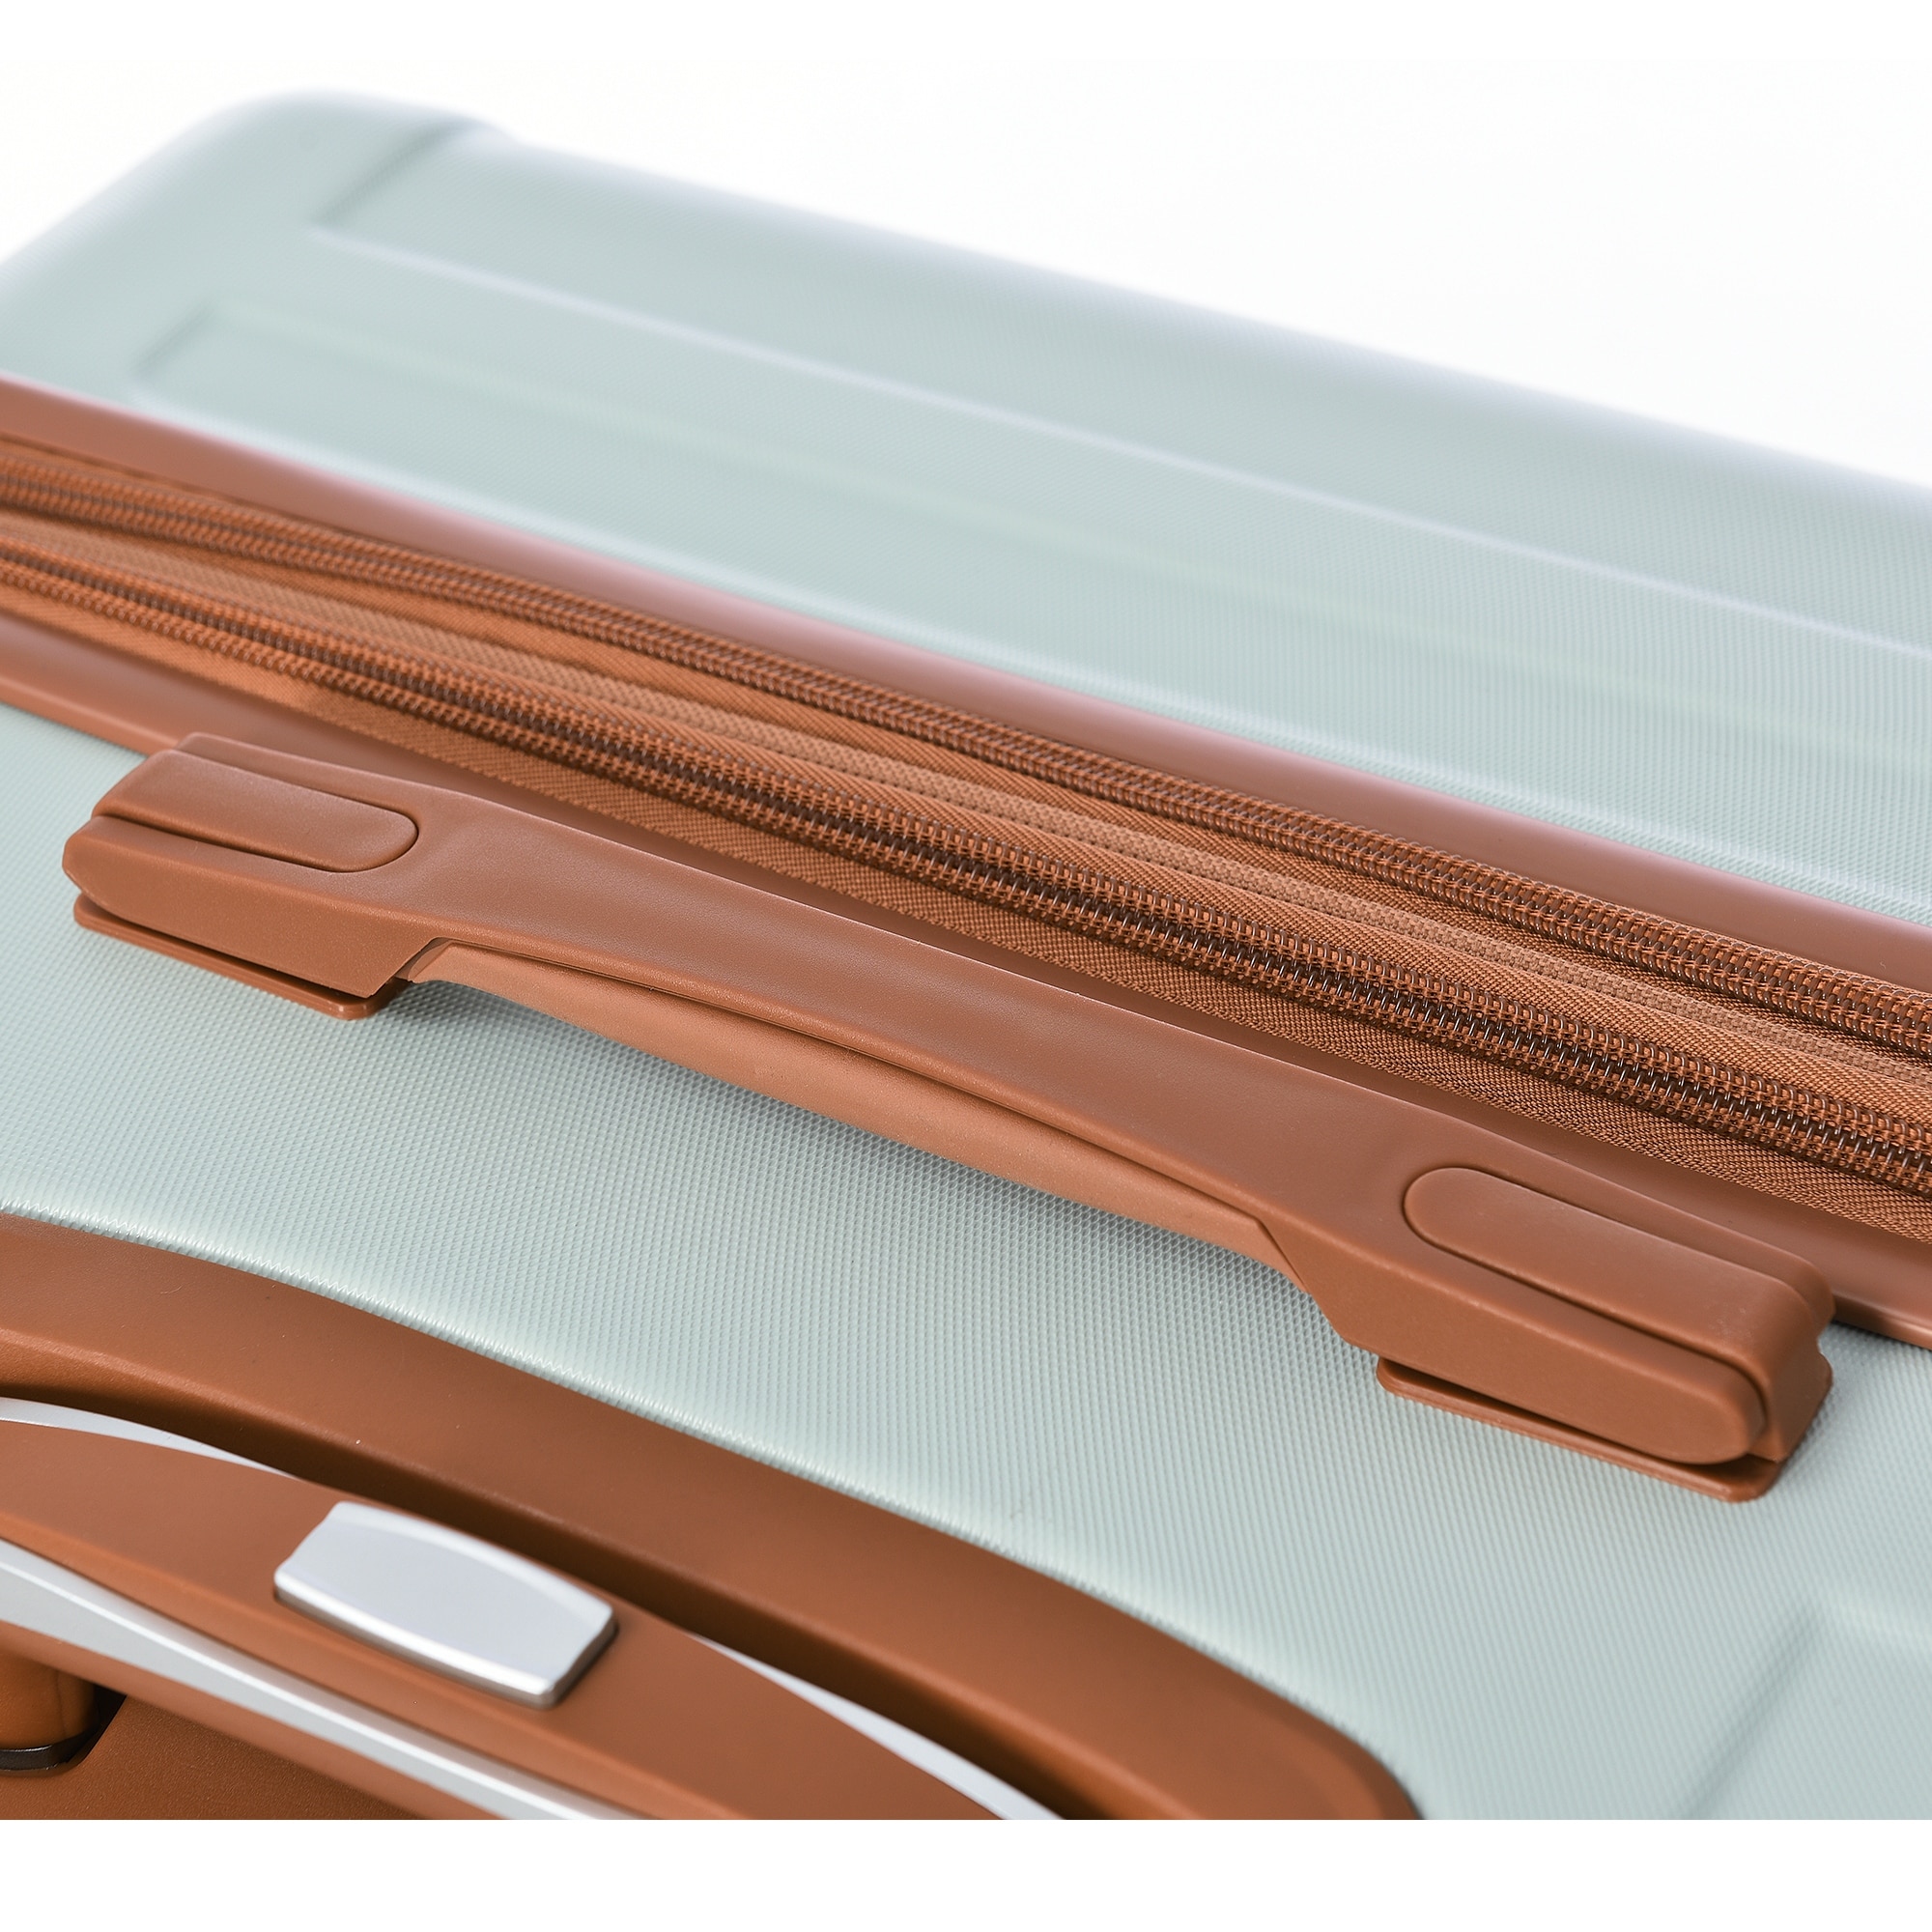 Green+Brown 3 piece Sets Side HooksHard Case Luggage with TSA Lock Storage Trunks